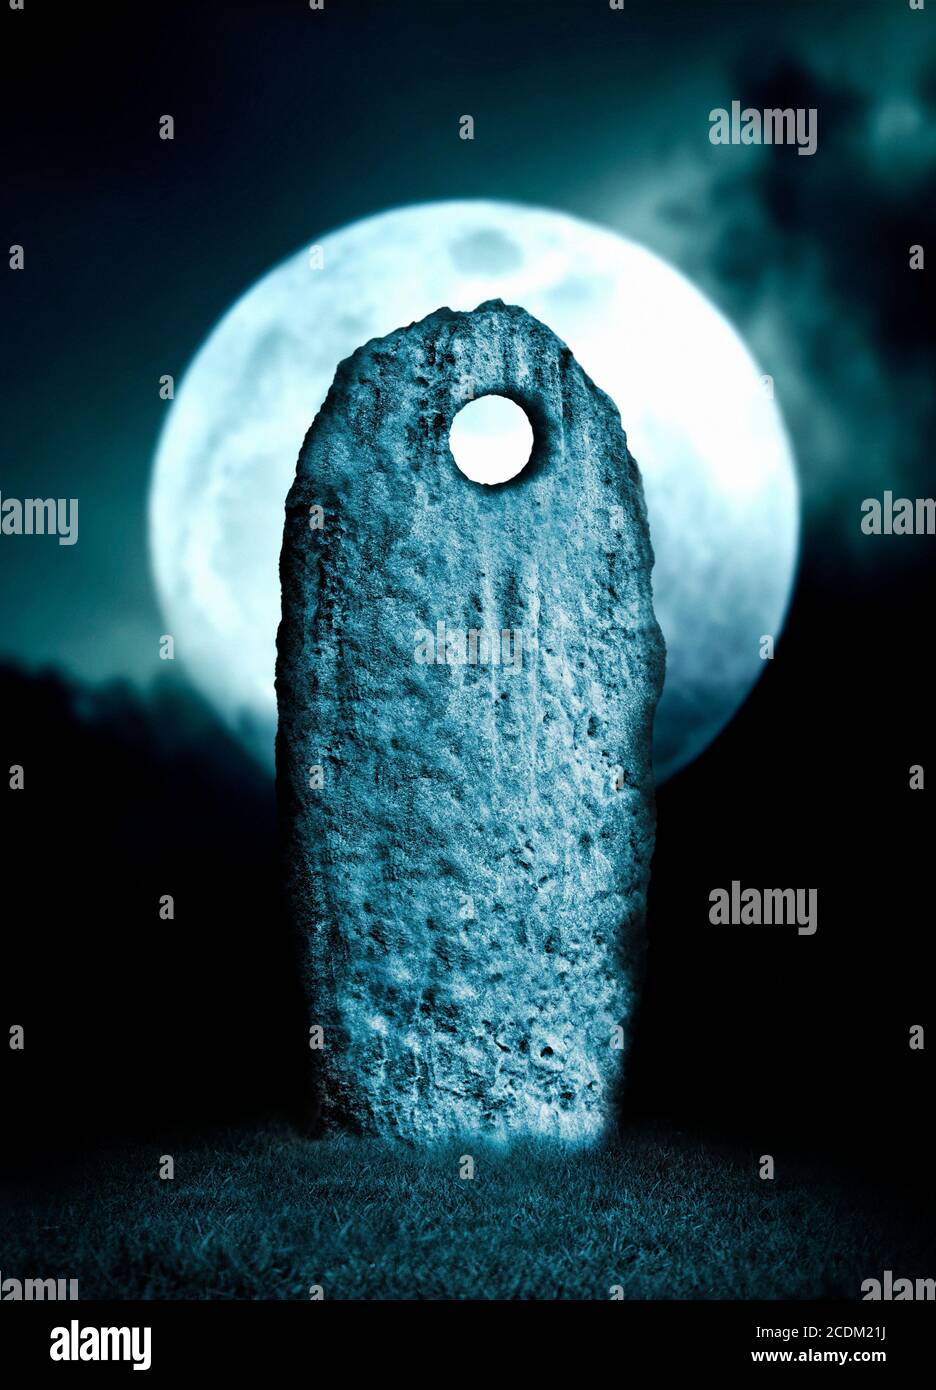 Moon behind standing stone, illustration. Stock Photo